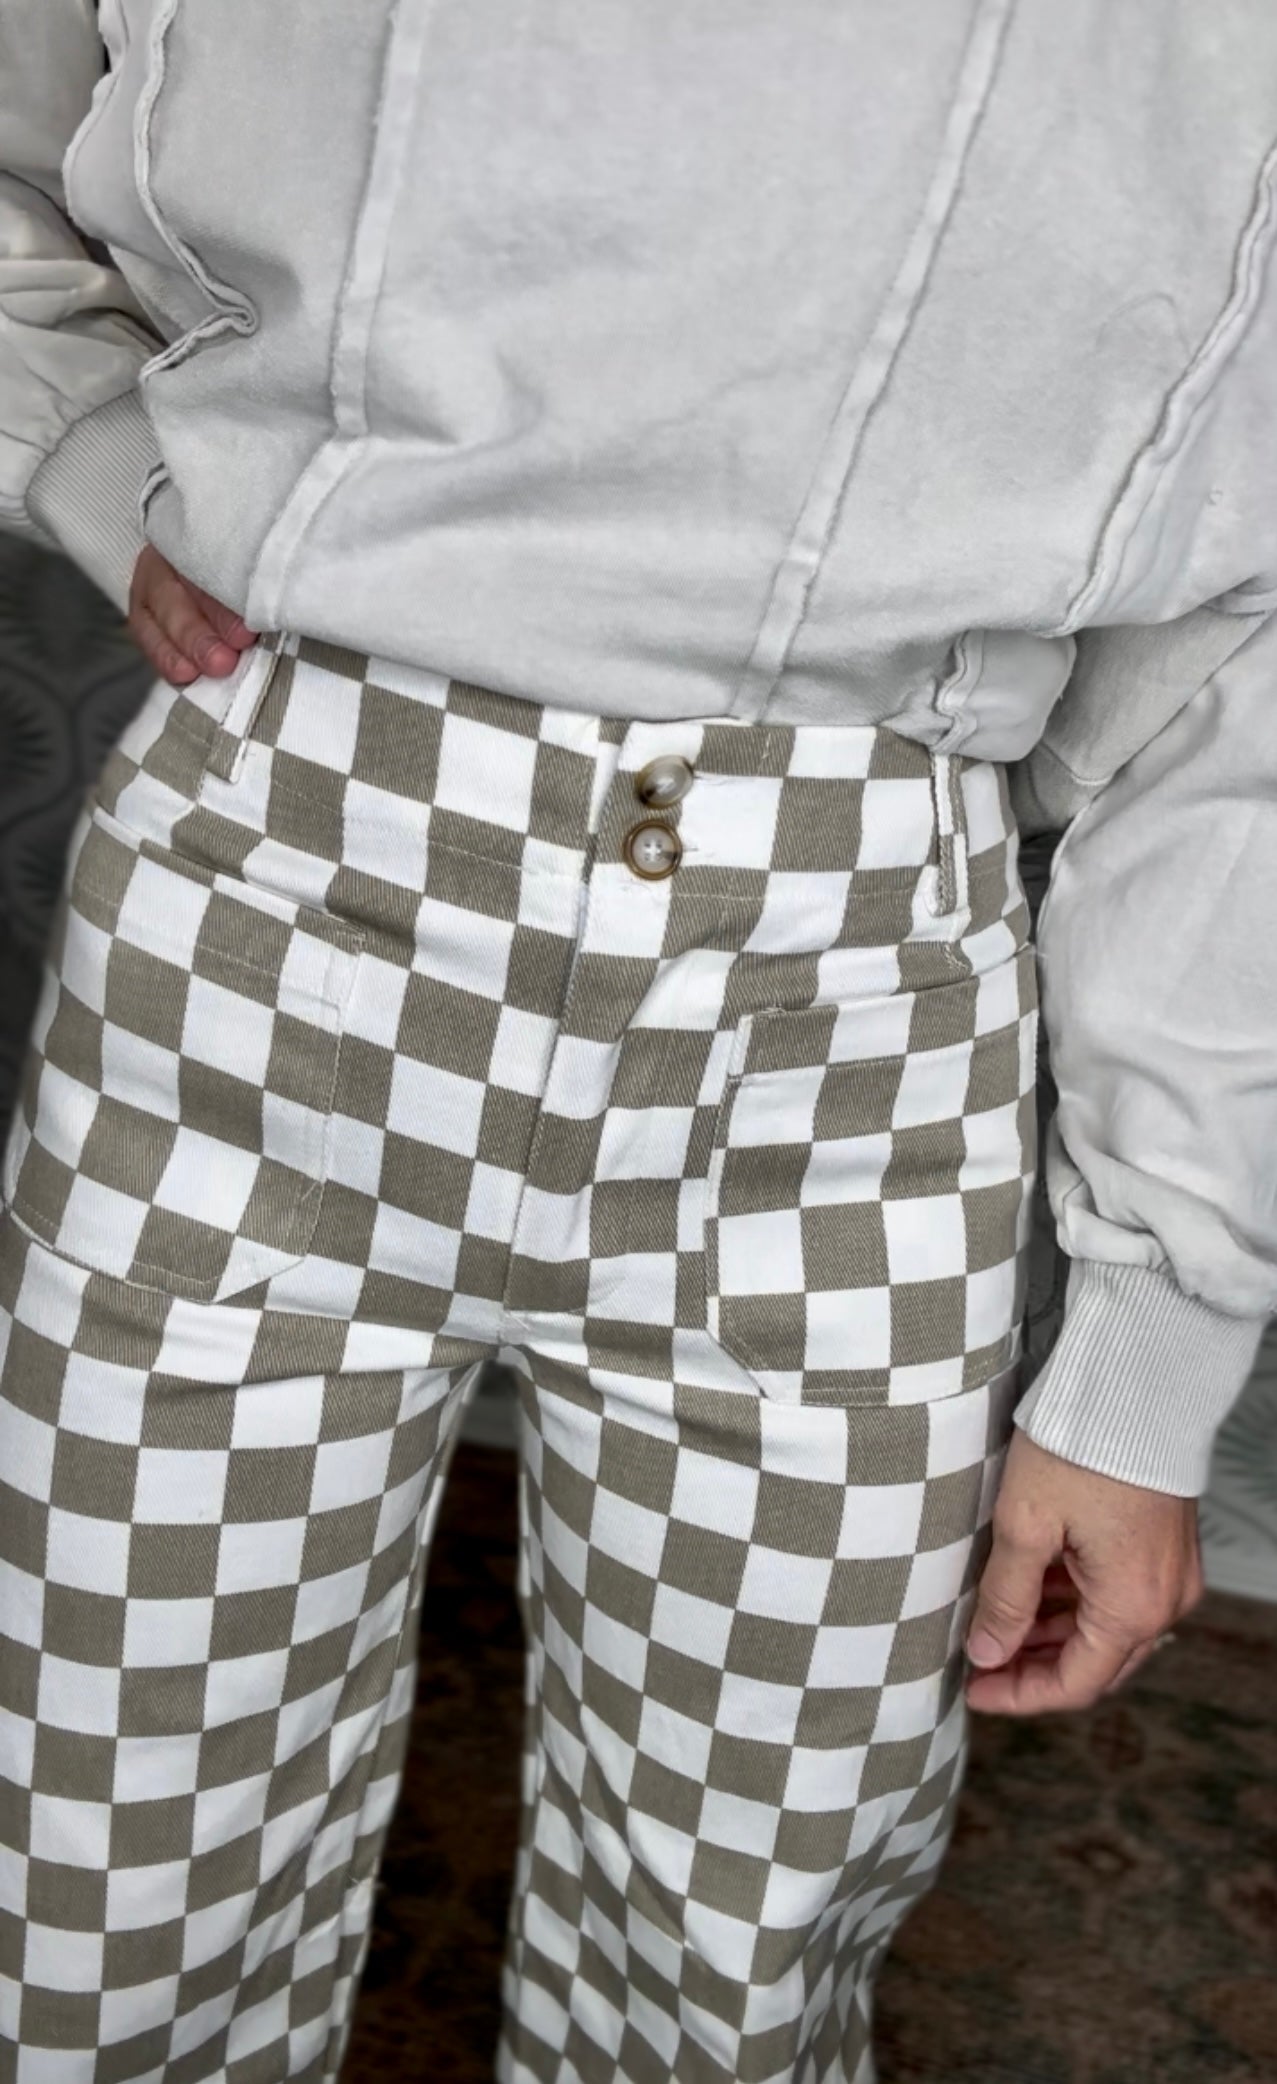 Checkered Pant